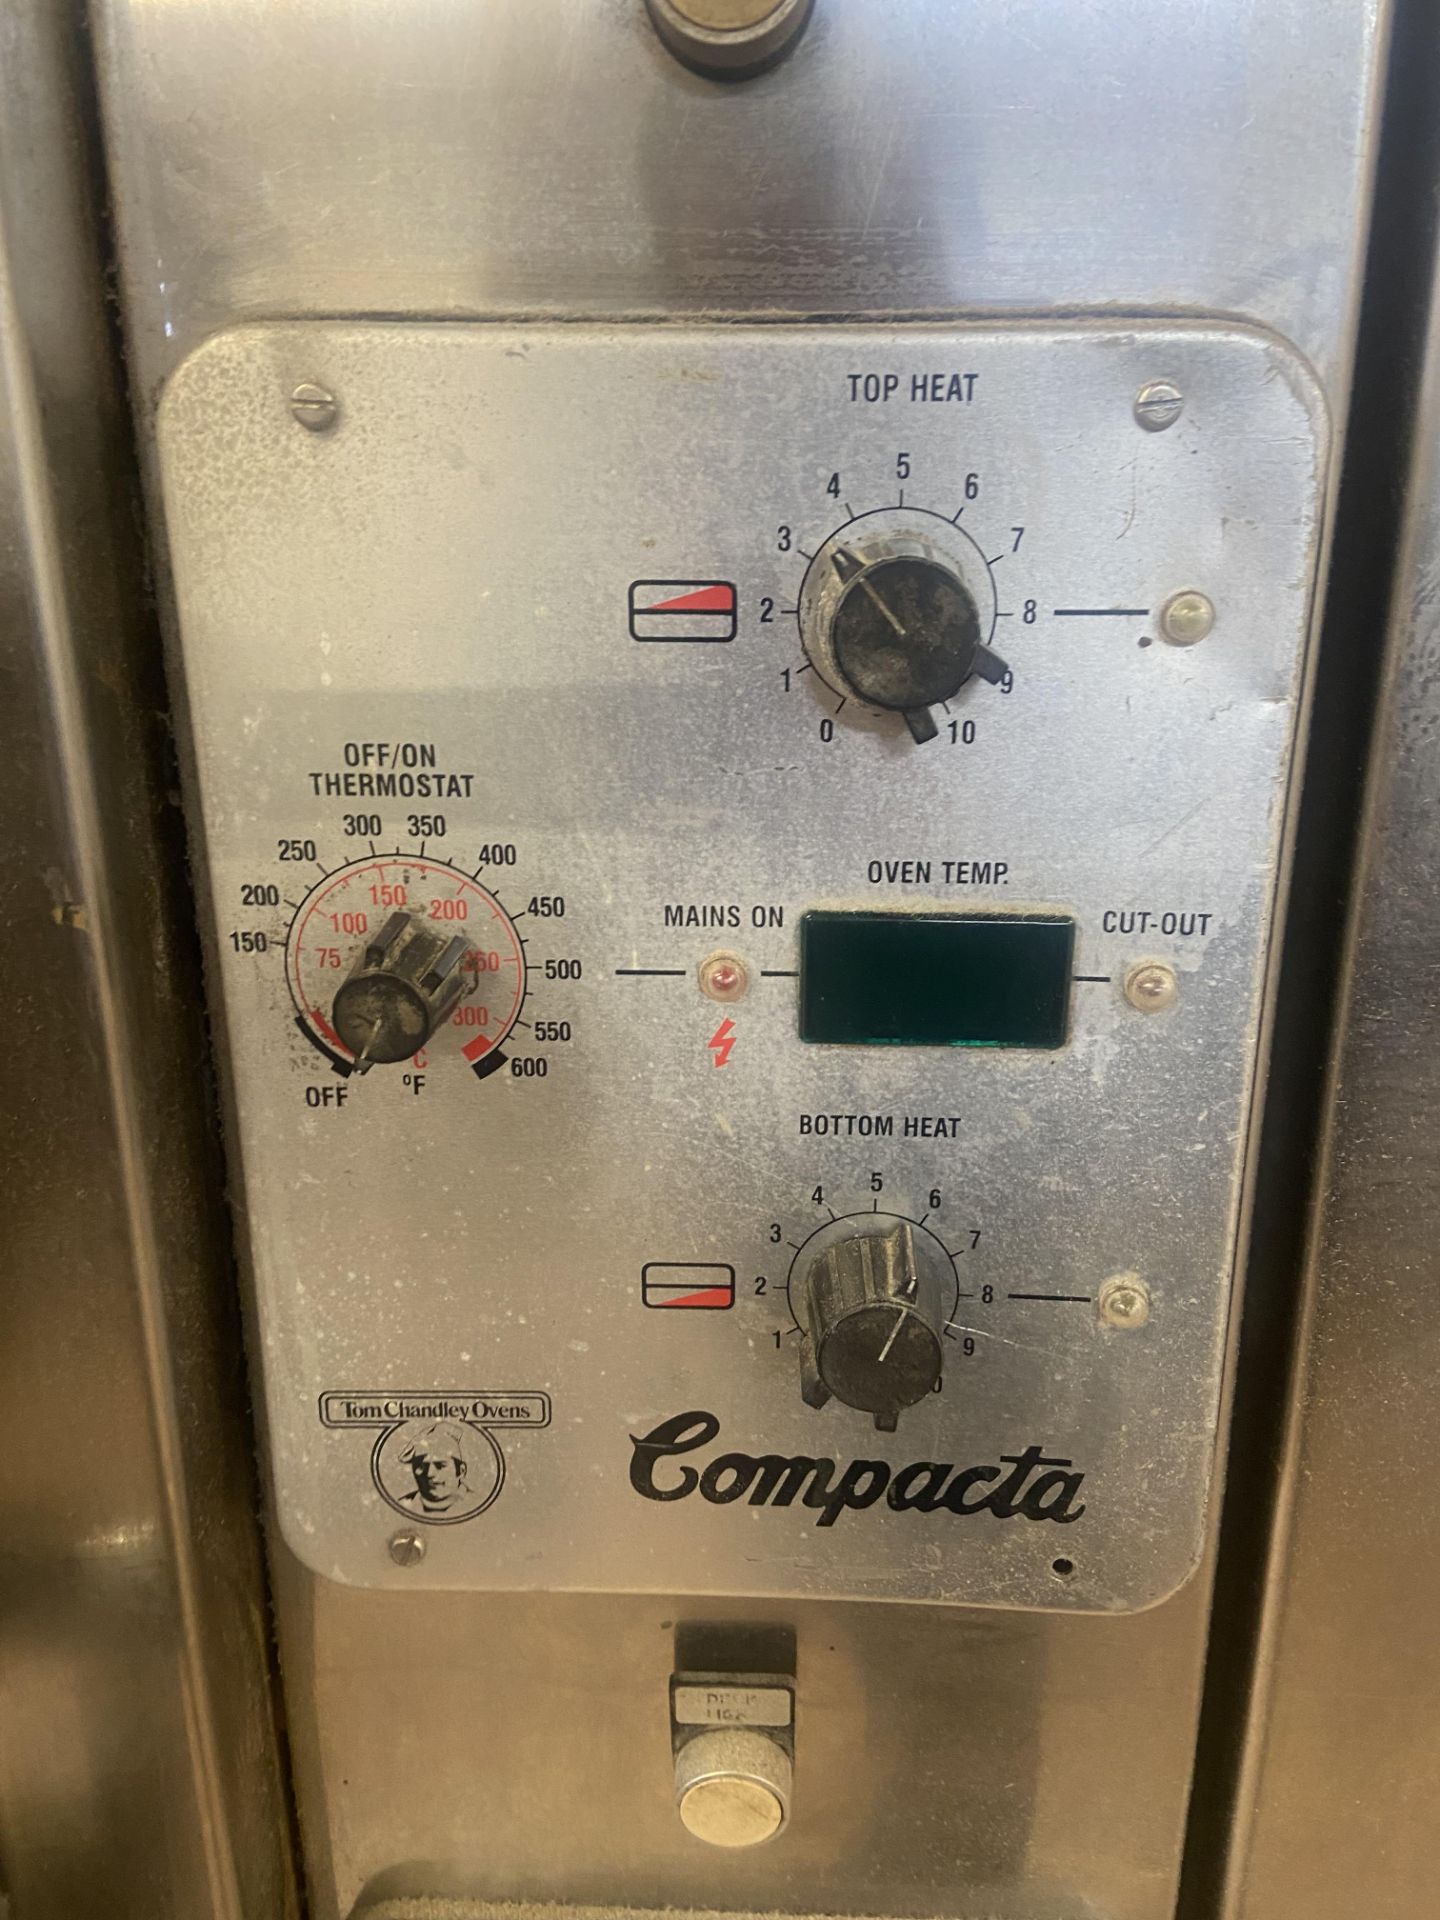 Tom Chandley Compacta Oven *NO VAT* - Image 3 of 3